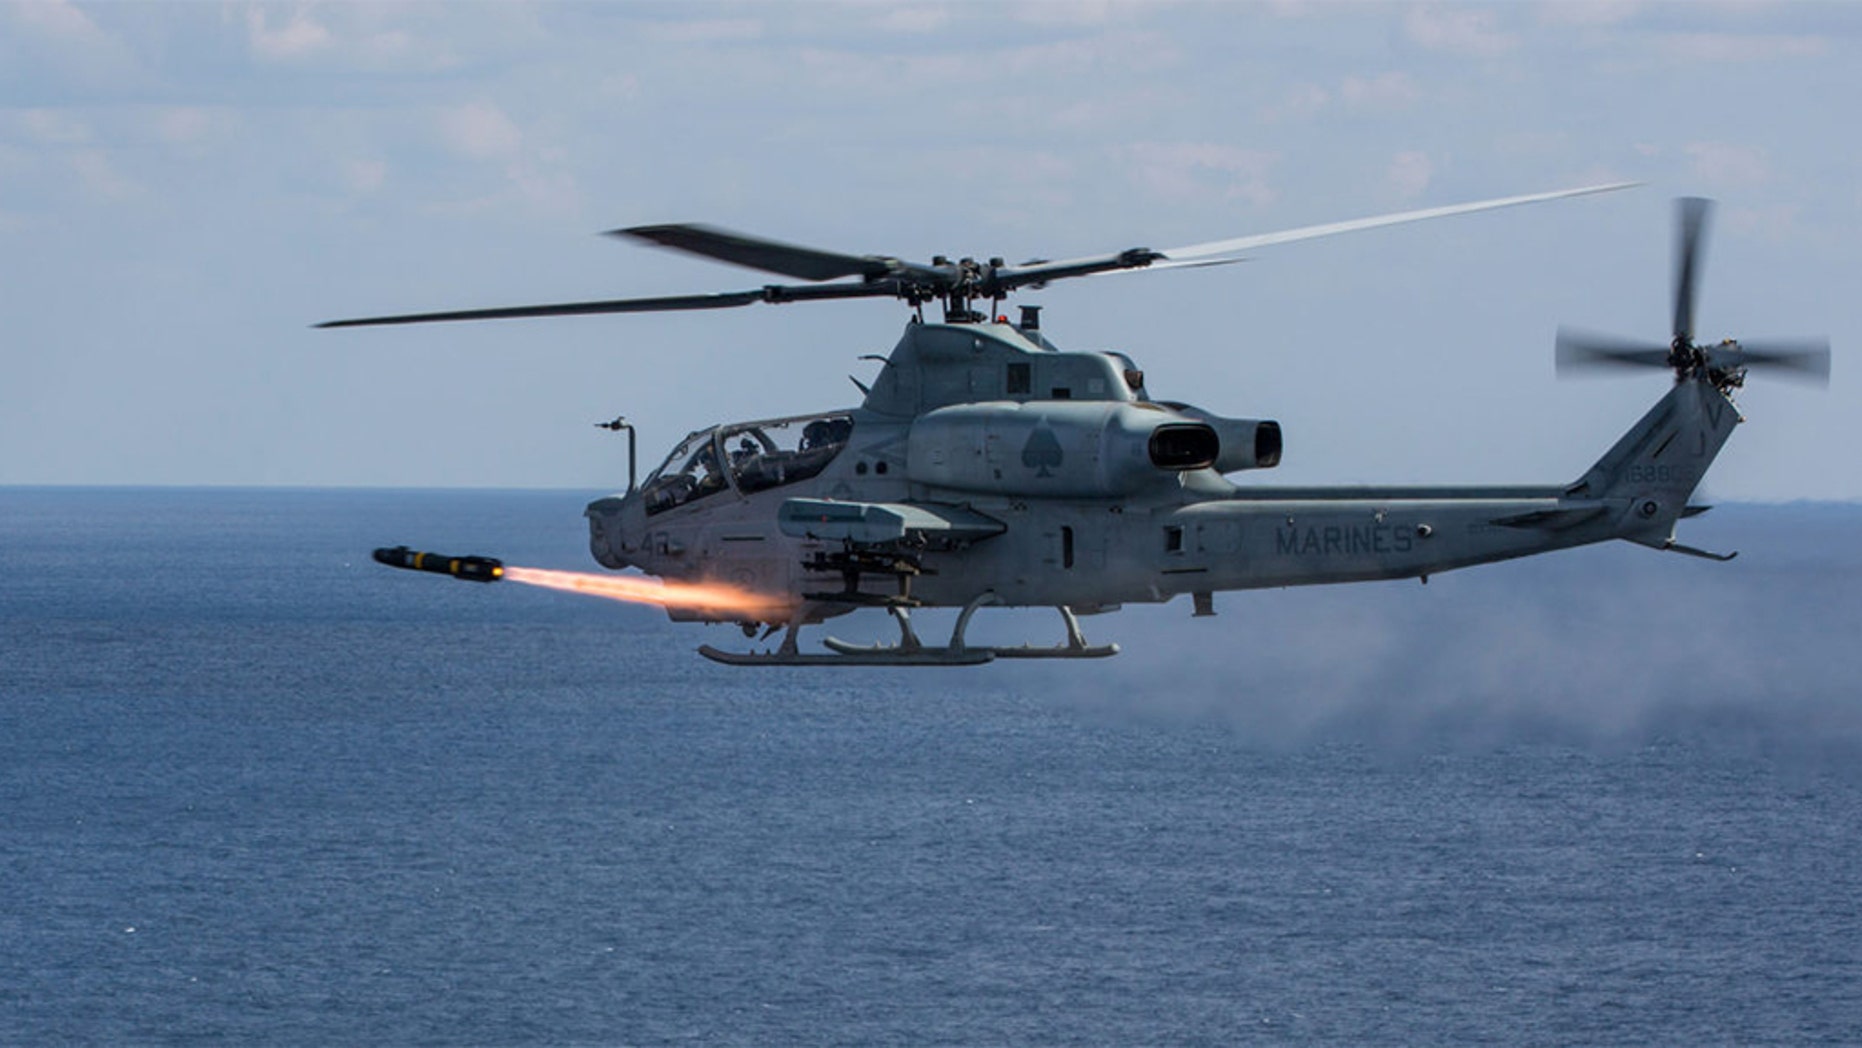 Two marine corps pilots killed in helicopter crash near Yuma, Arizona